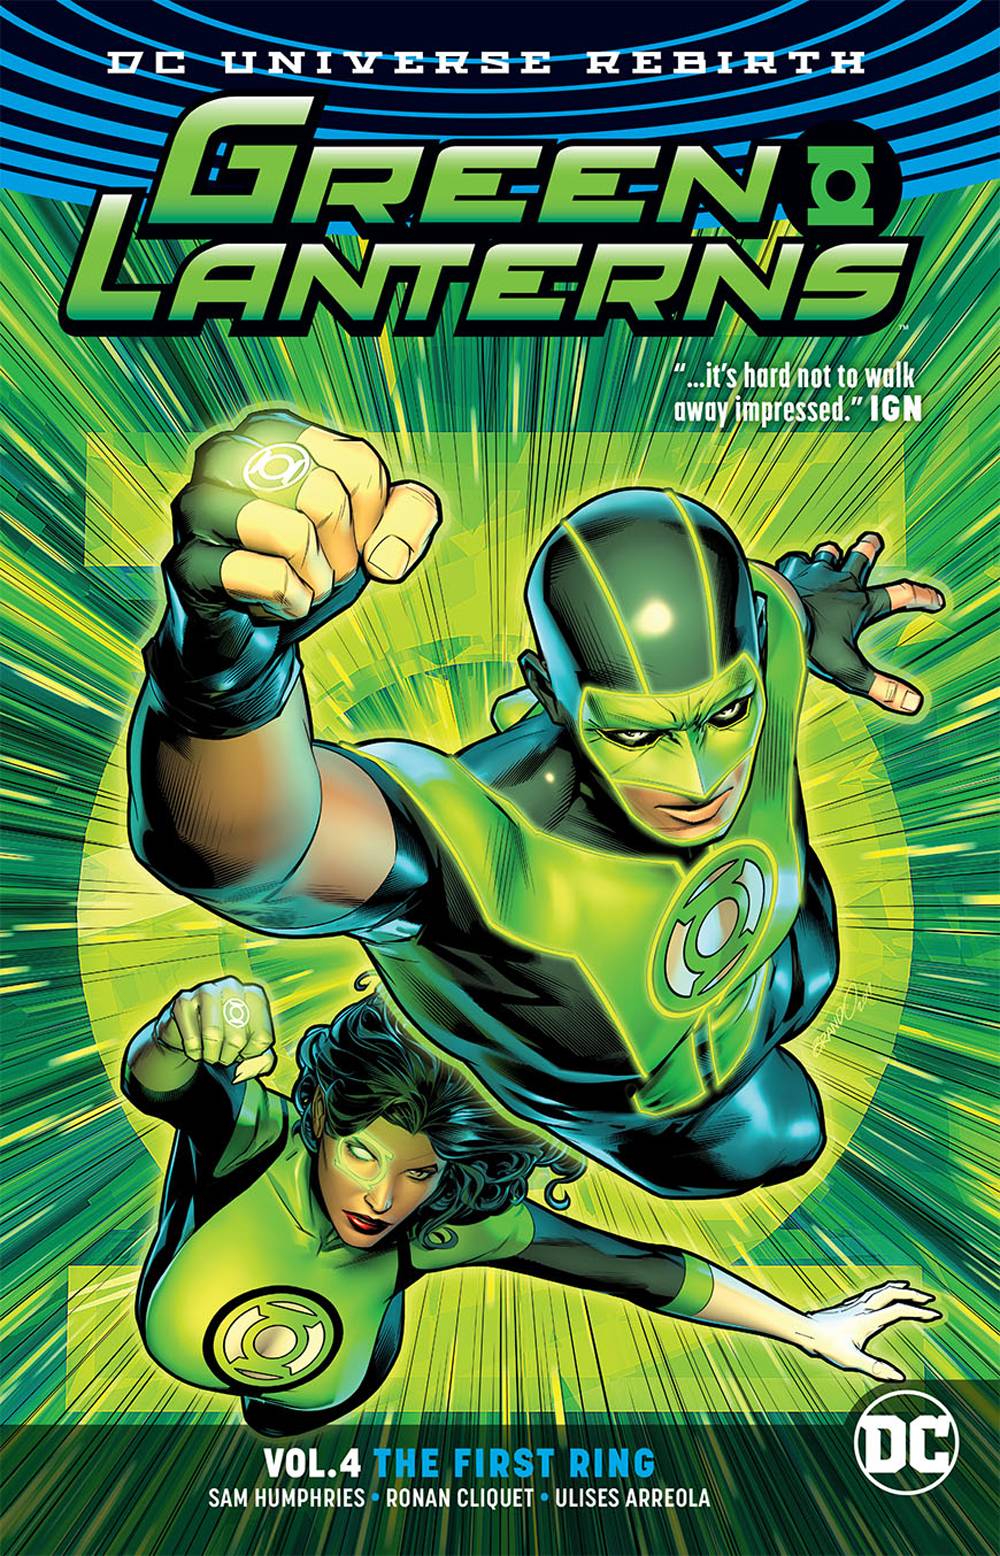 Buy Green Lanterns Graphic Novel Volume 4 The First Rings Rebirth Comichub Virtual Store